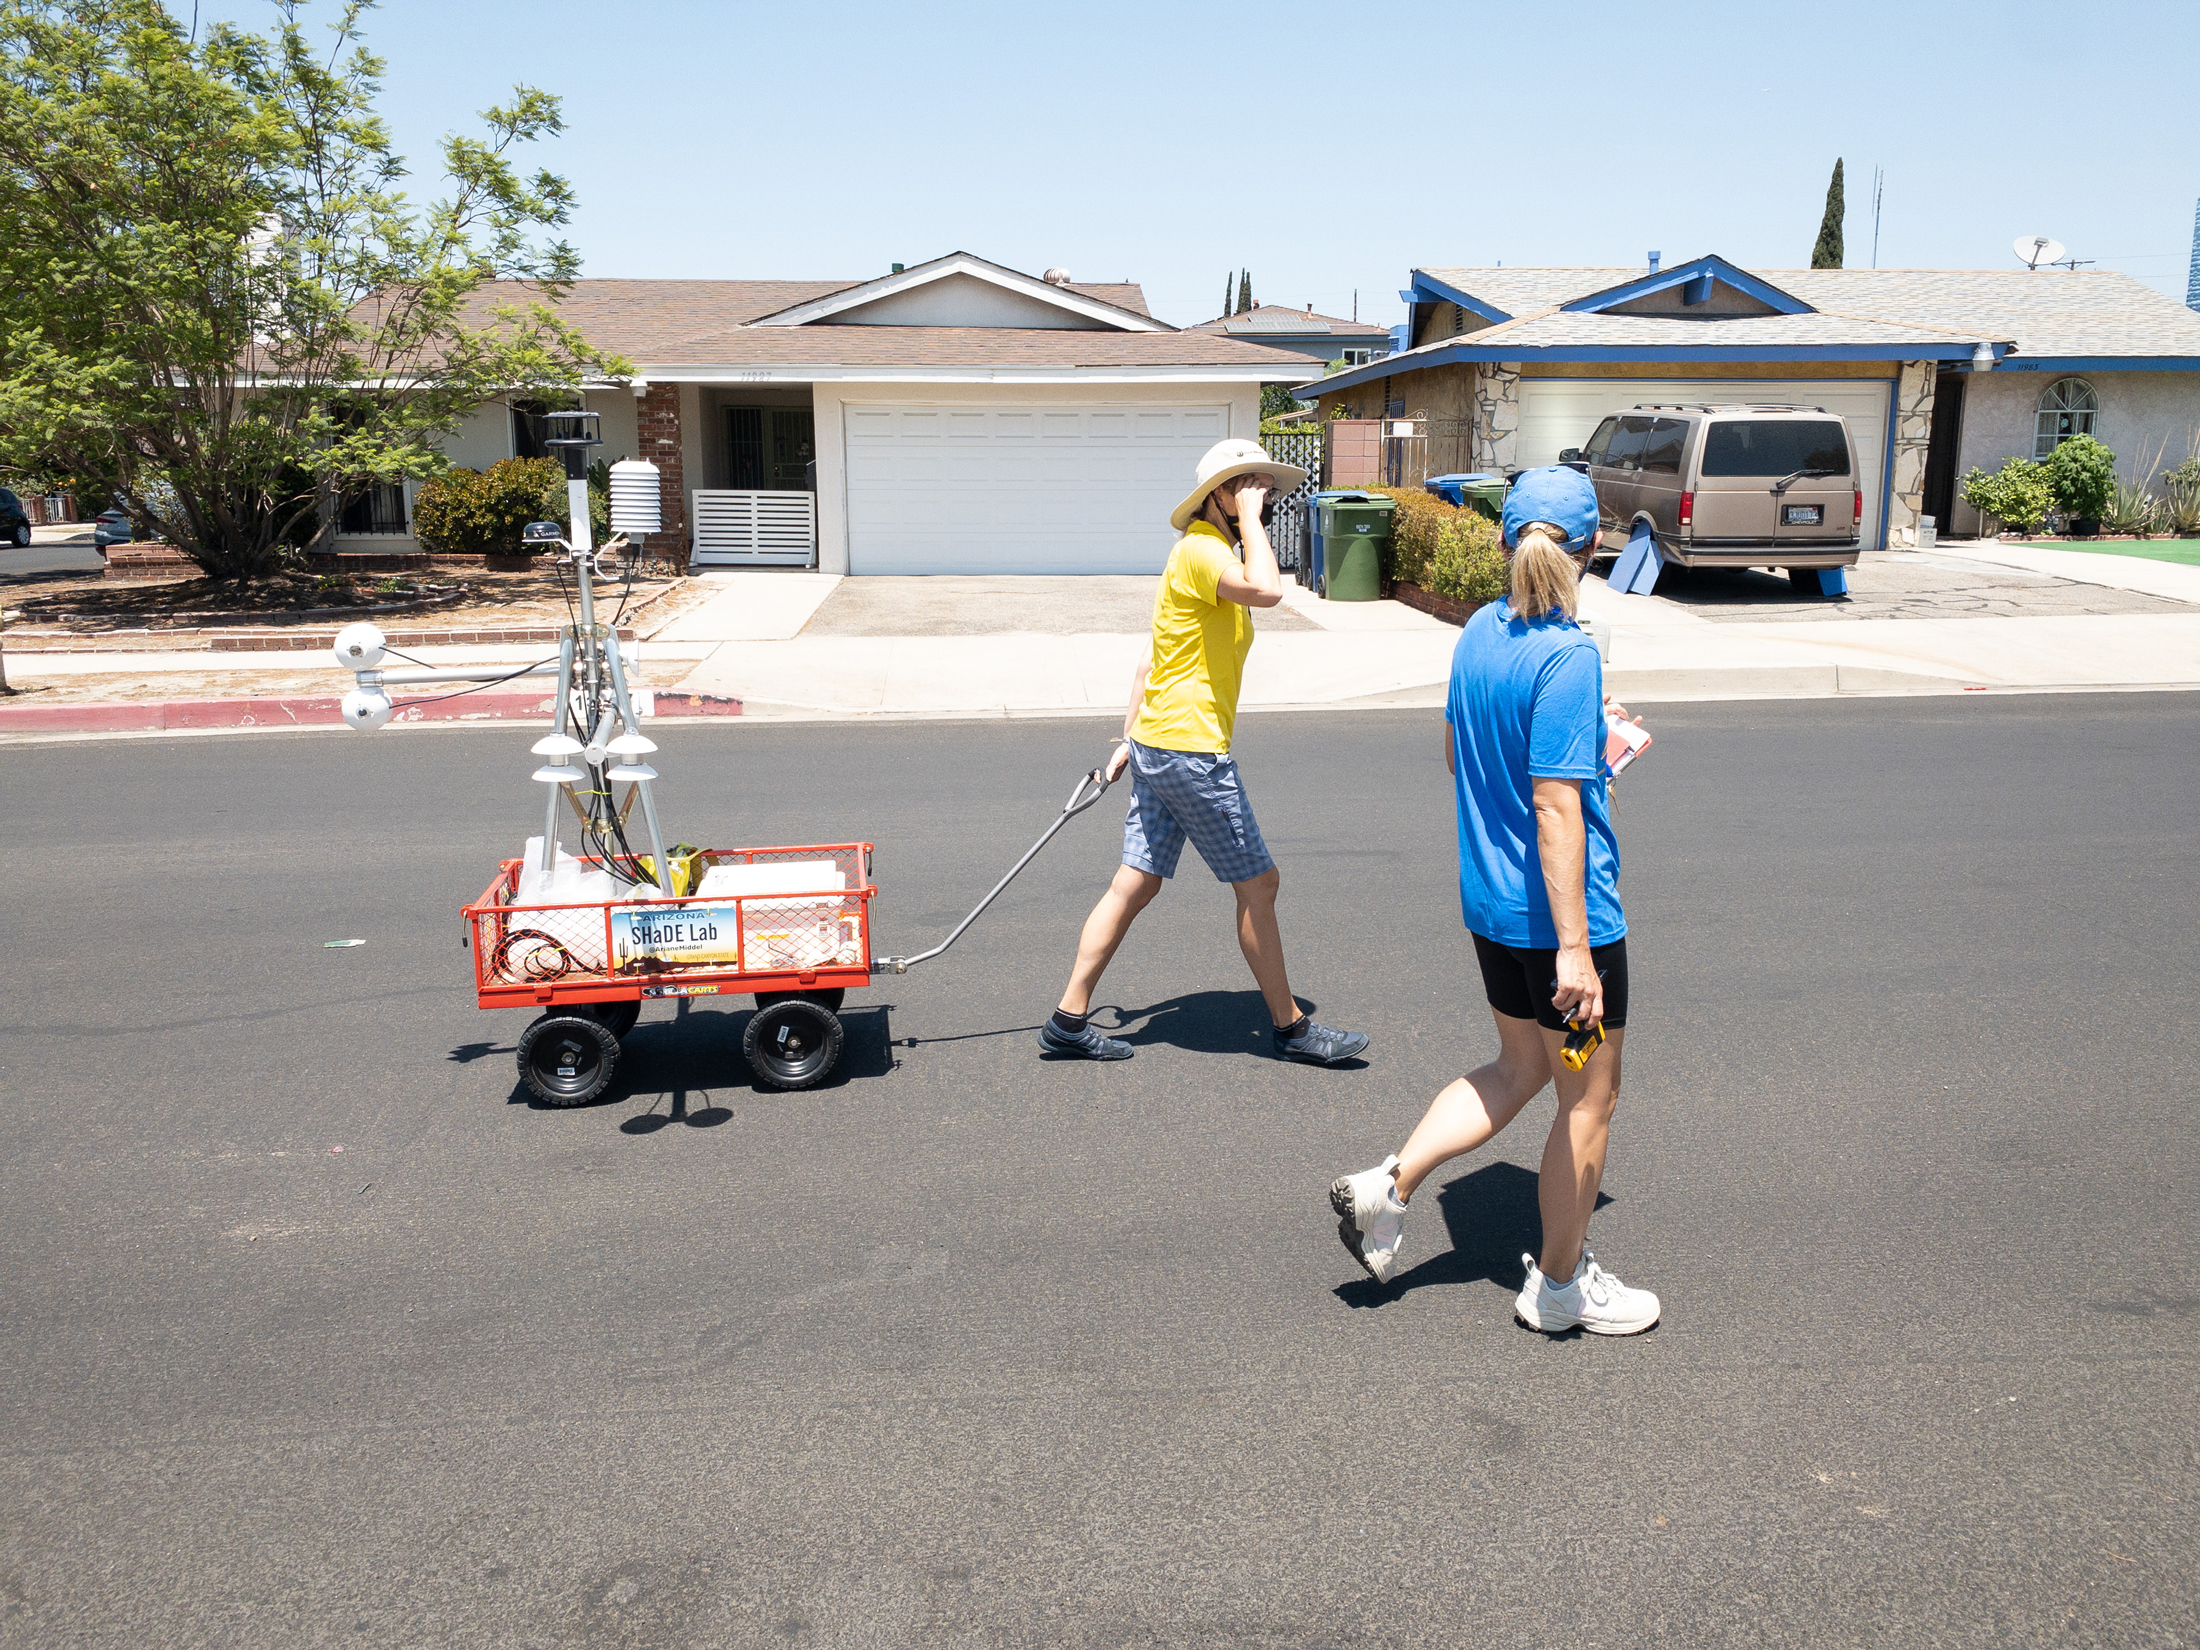 Two women walking through an urban neighborhood with heat measurement technology in a wagon